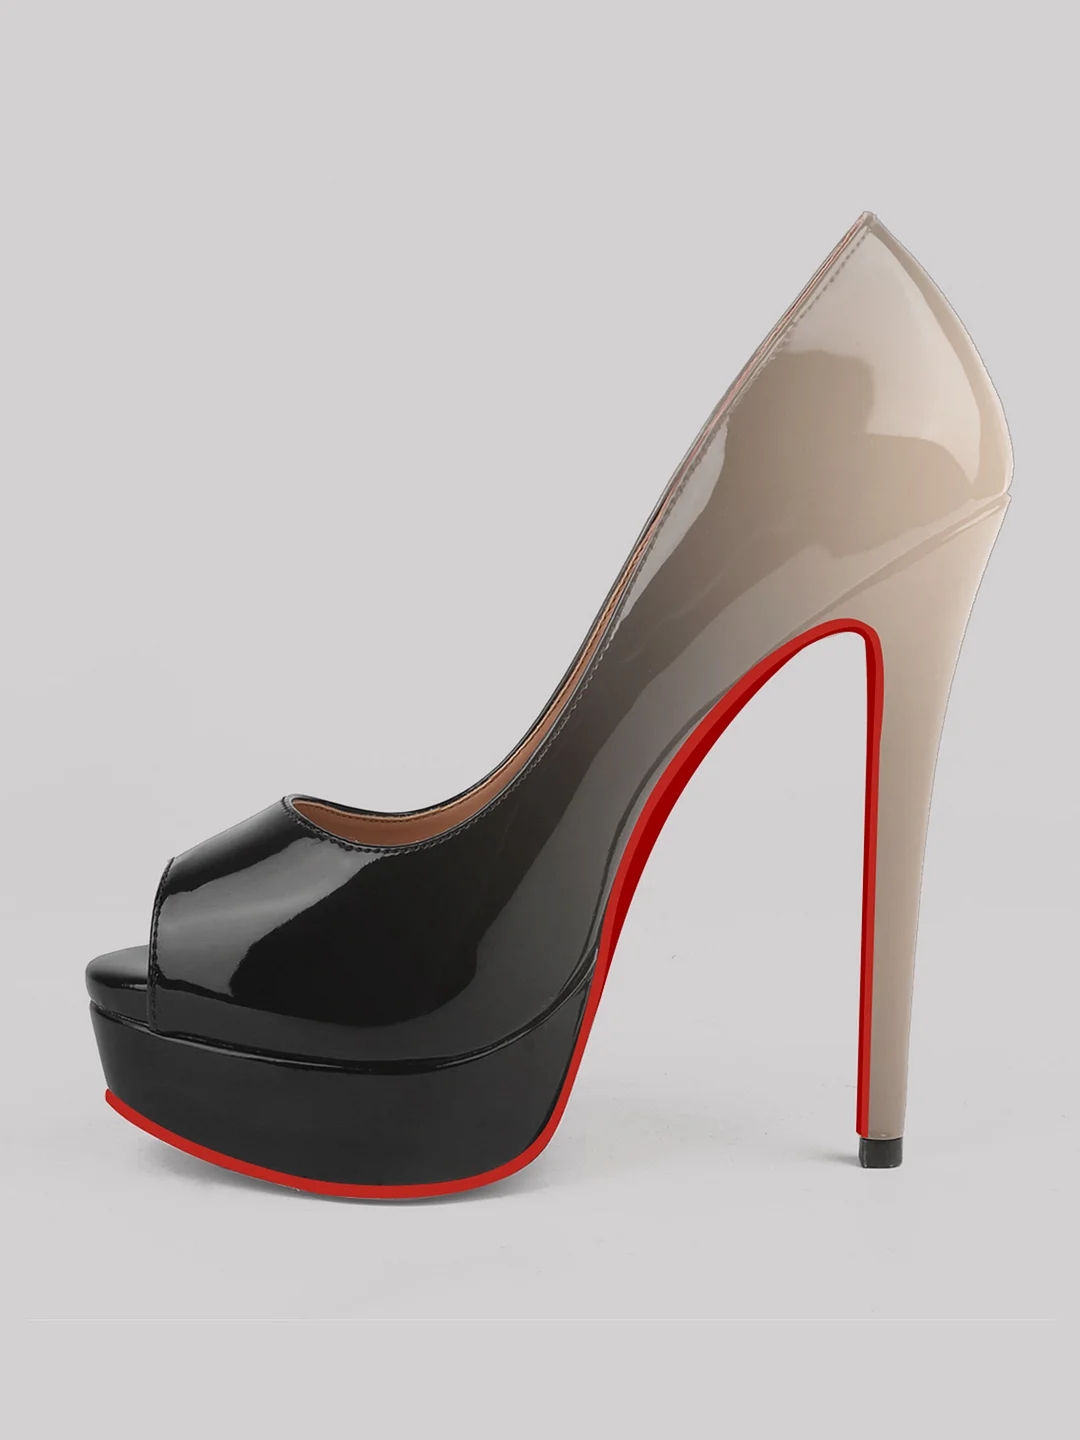 150mm Women's Platform High Heels Red Bottoms Peep Toe Pumps Patent Gradient Shoes